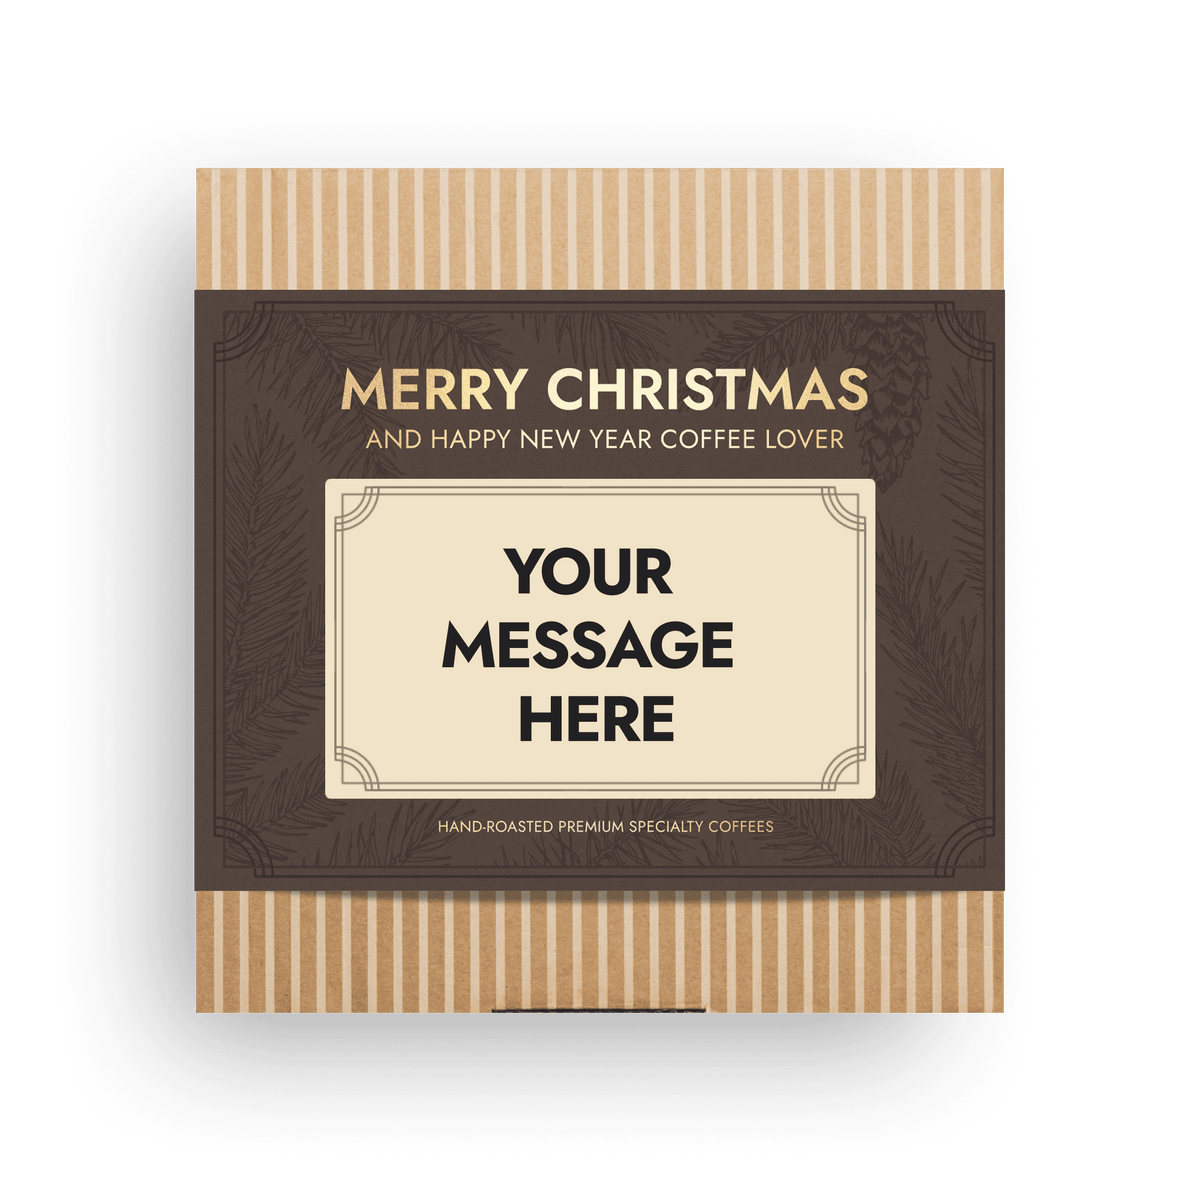 SPECIALTY COFFEE BEAN CHRISTMAS GIFT BOX CUSTOM